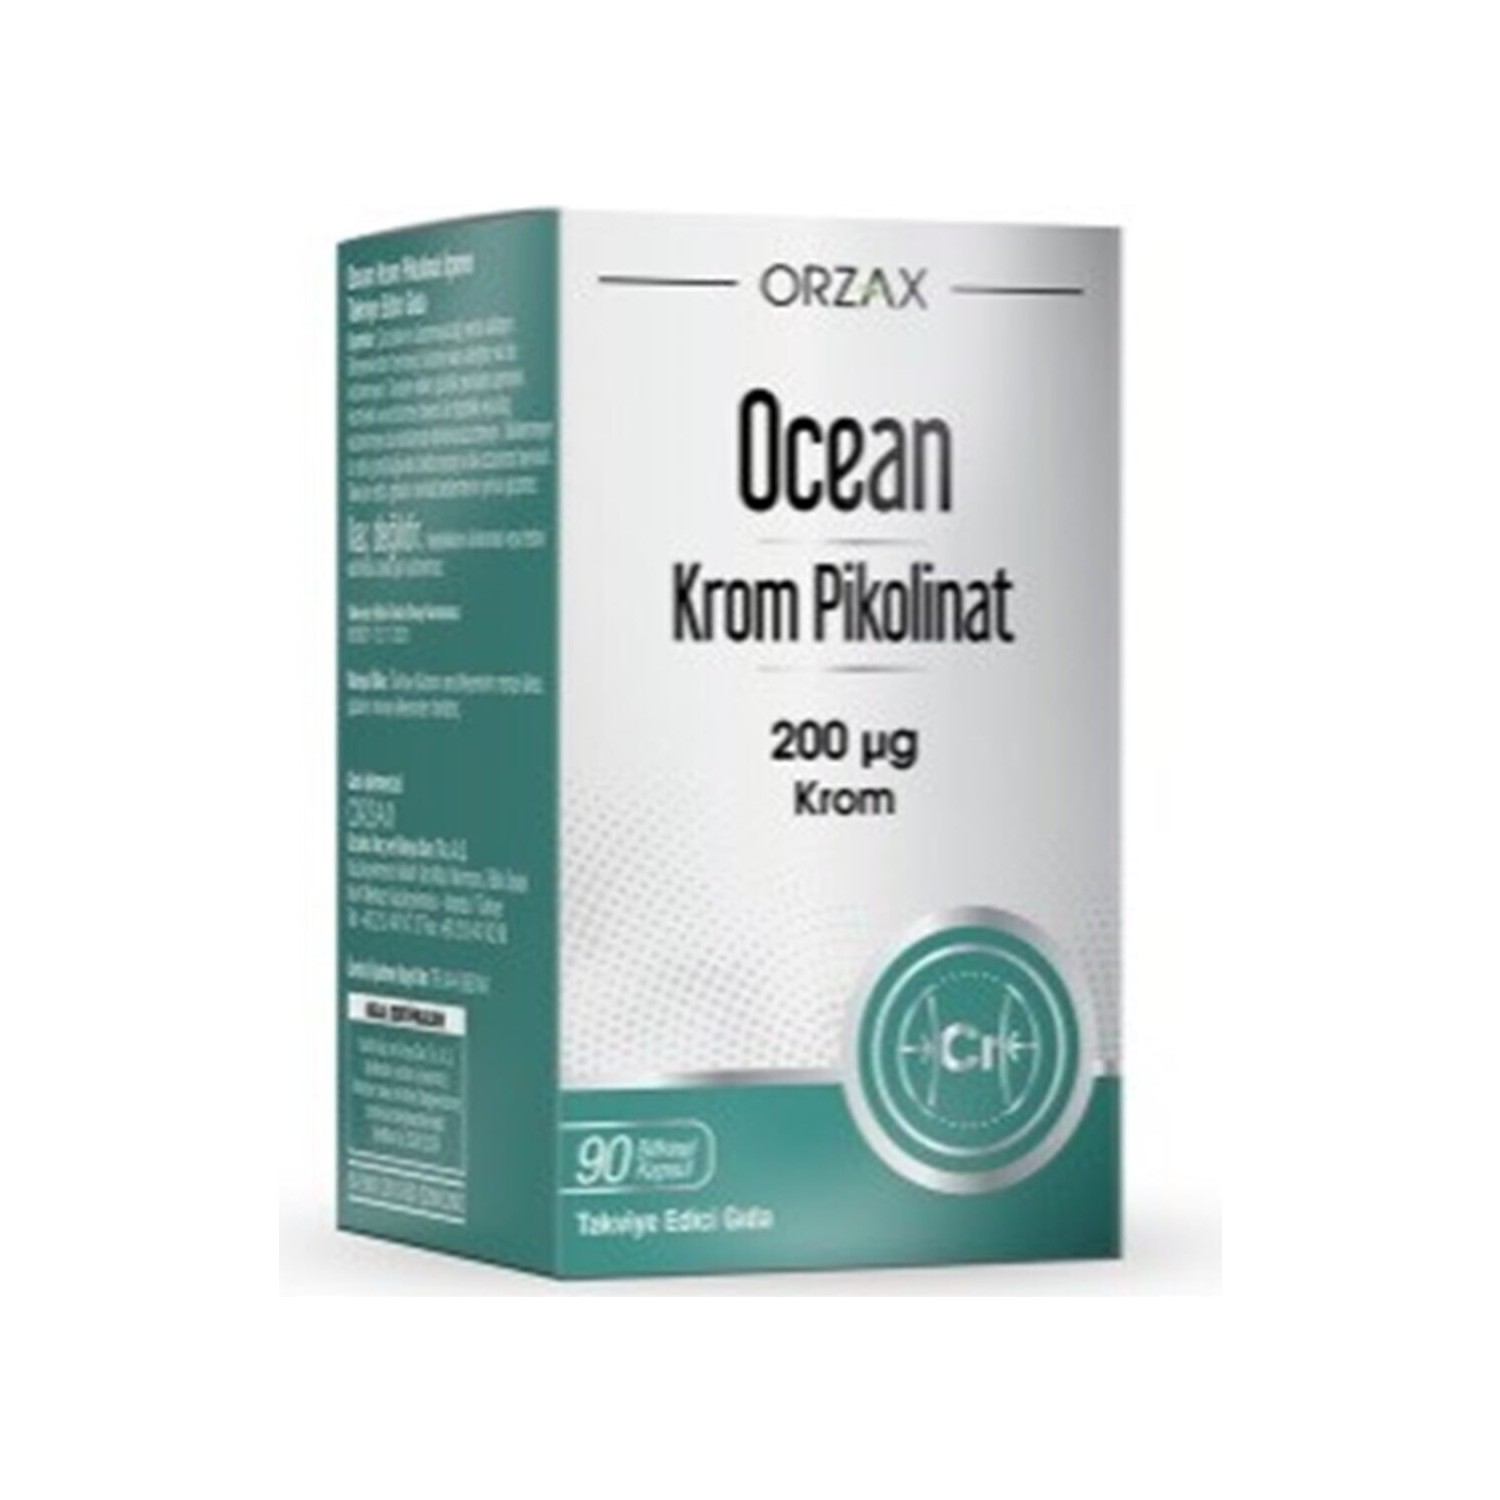 Пиколинат хрома Ocean, 90 капсул пиколинат хрома tetralab 90 таблеток по 100 мг